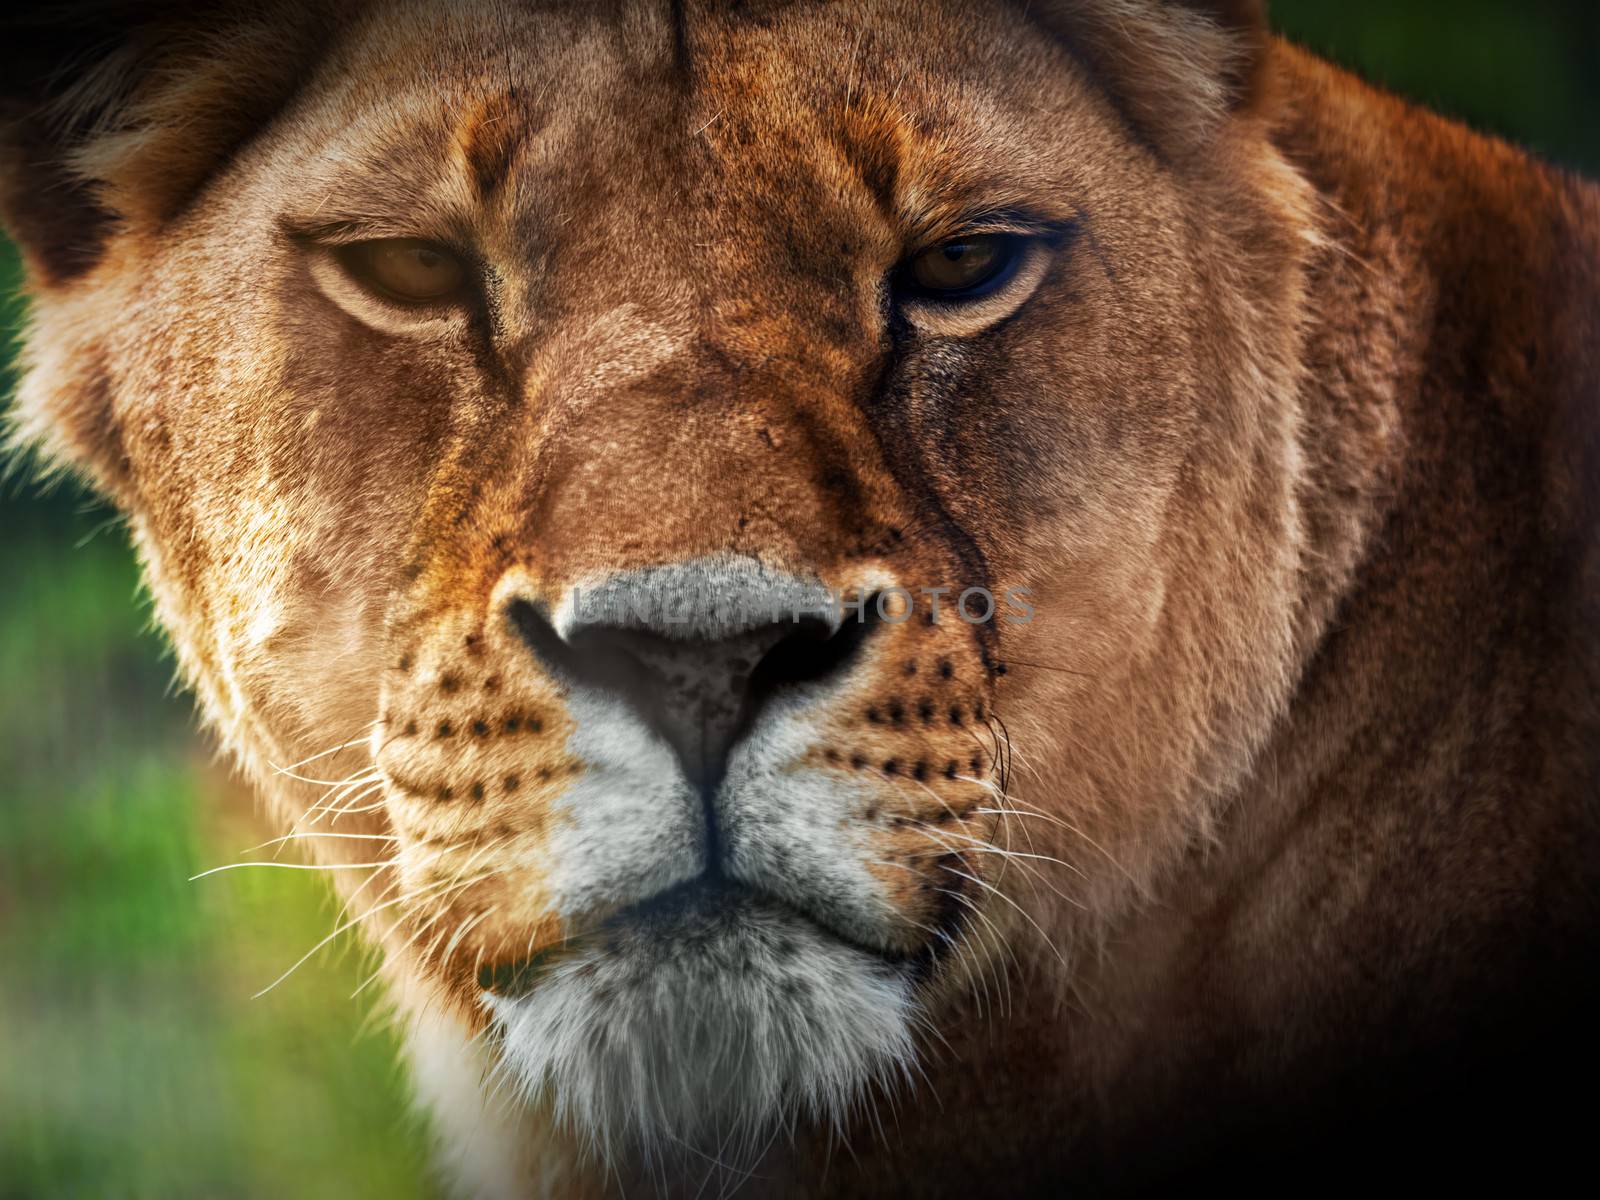 Lioness lion portrait by photocreo